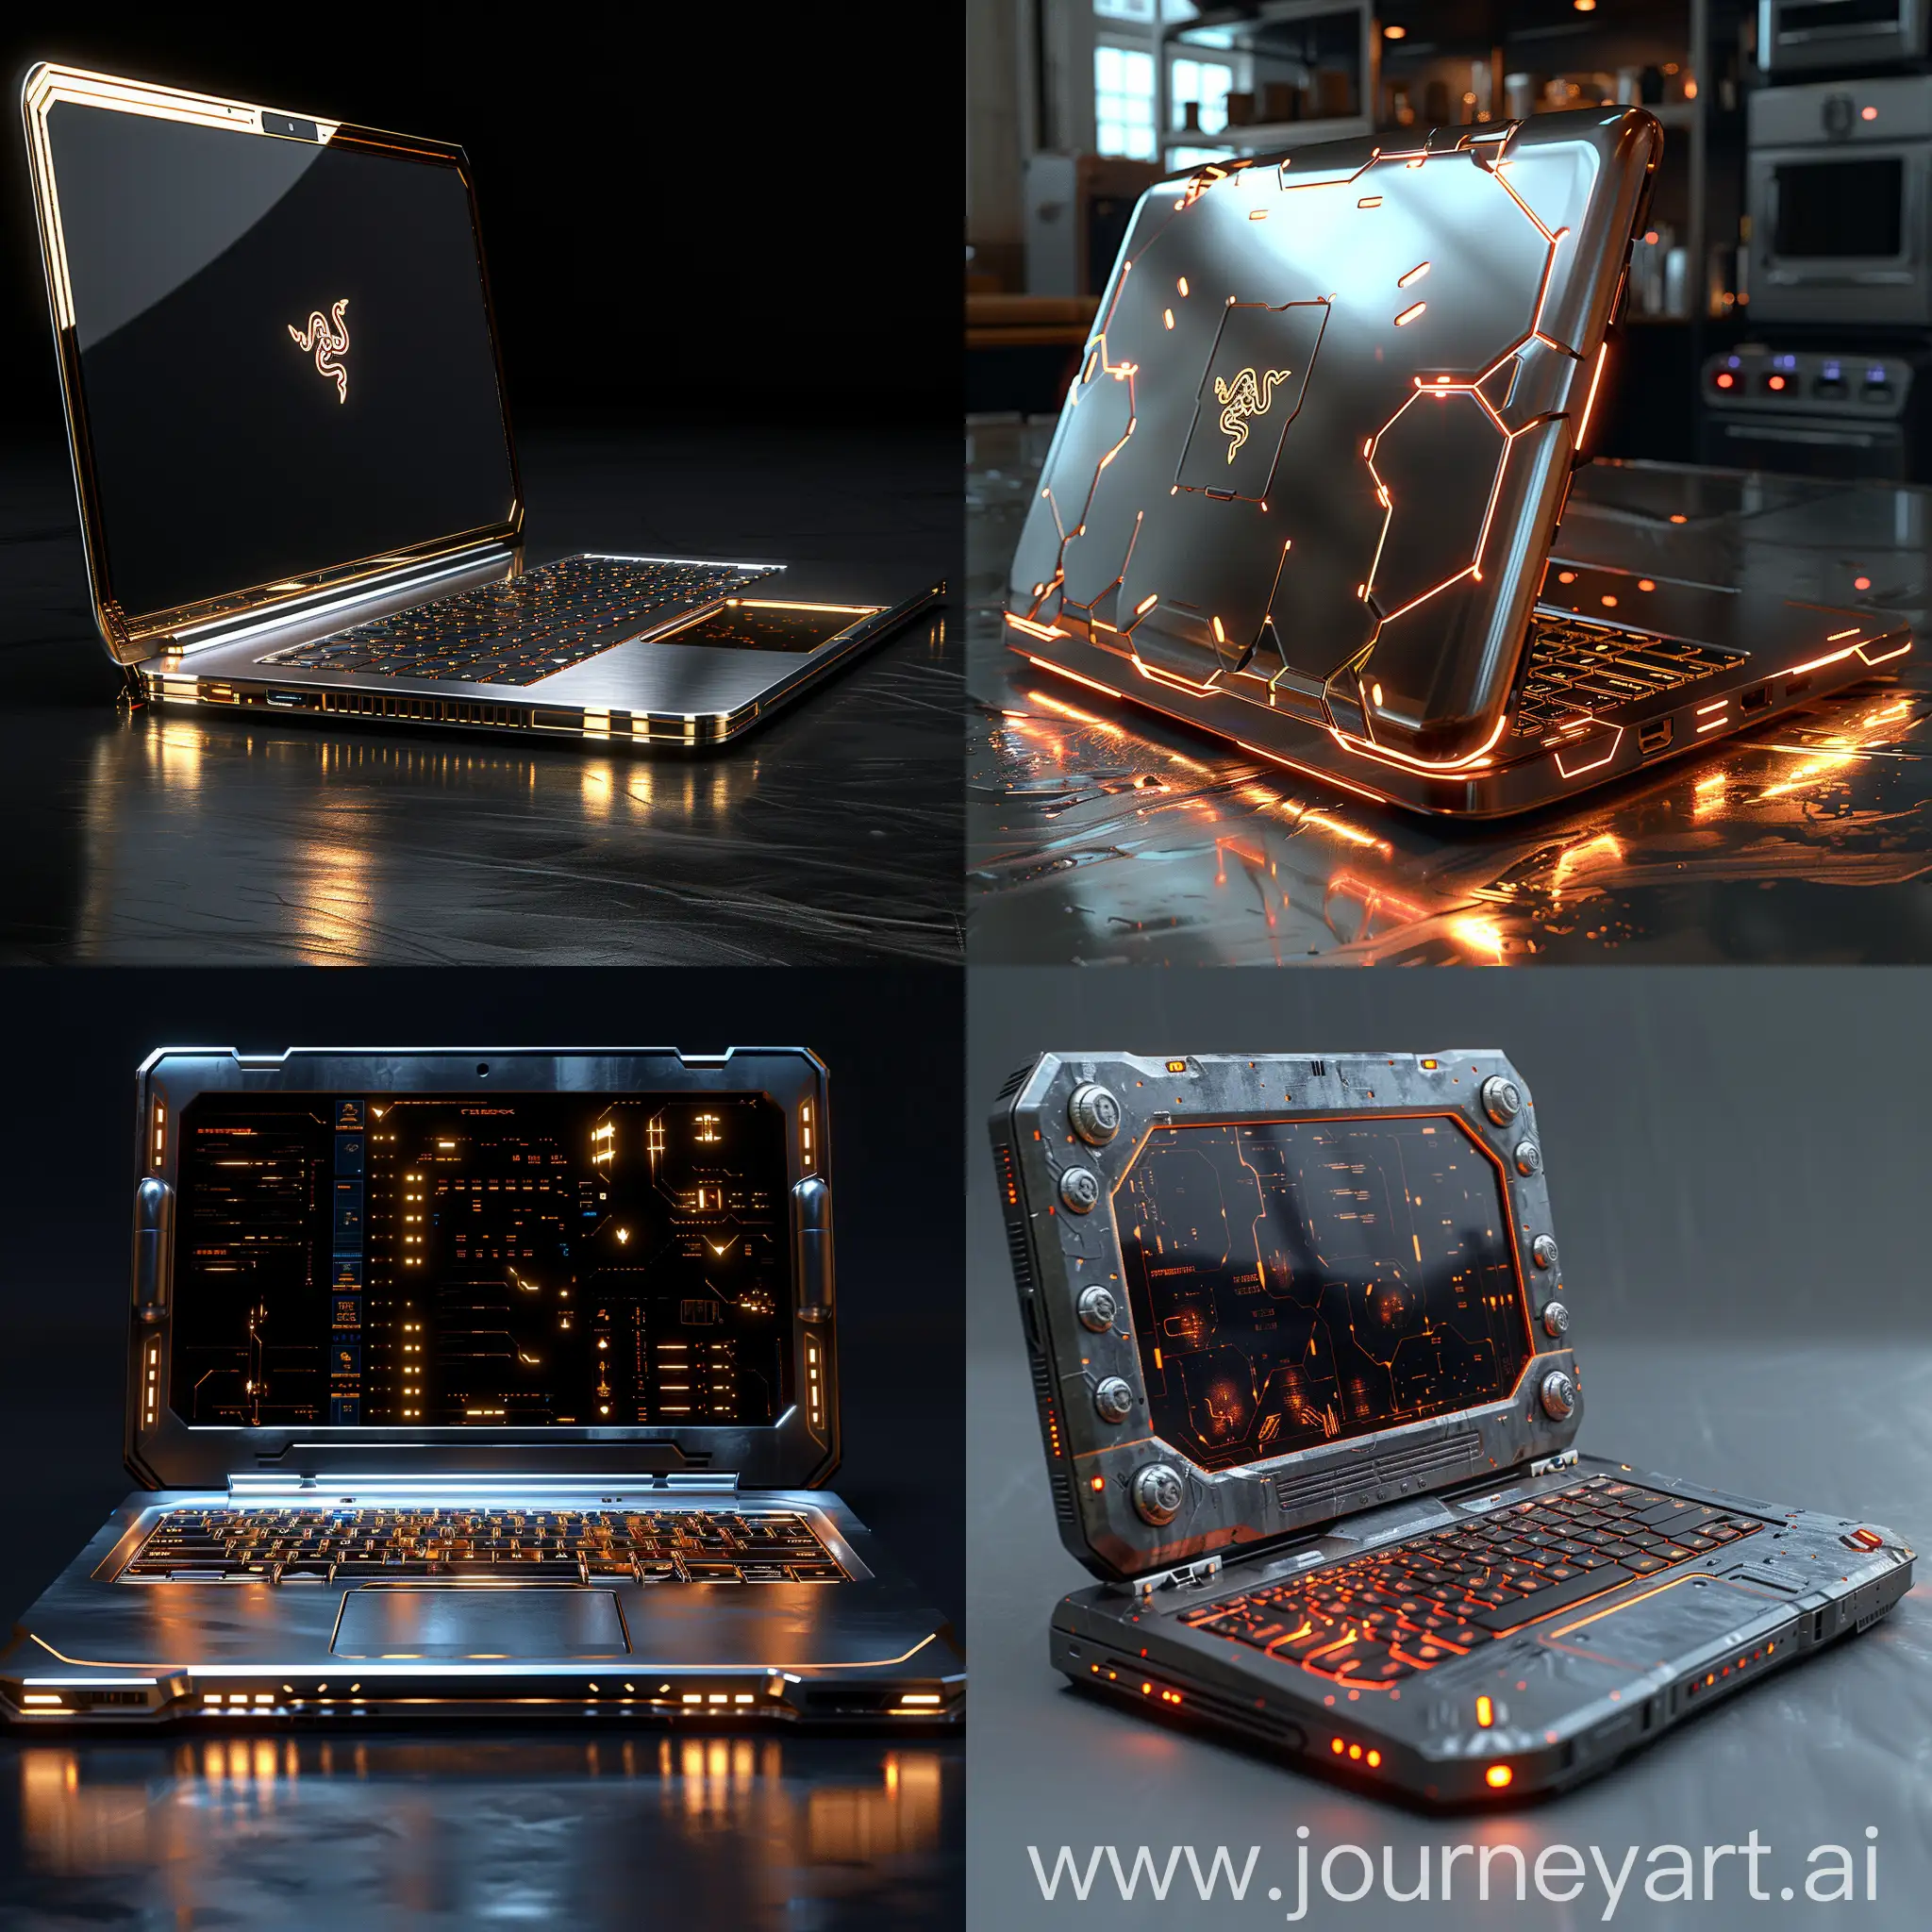 Futuristic laptop, stainless steel, reinforced materials, high tech, octane render --stylize 1000